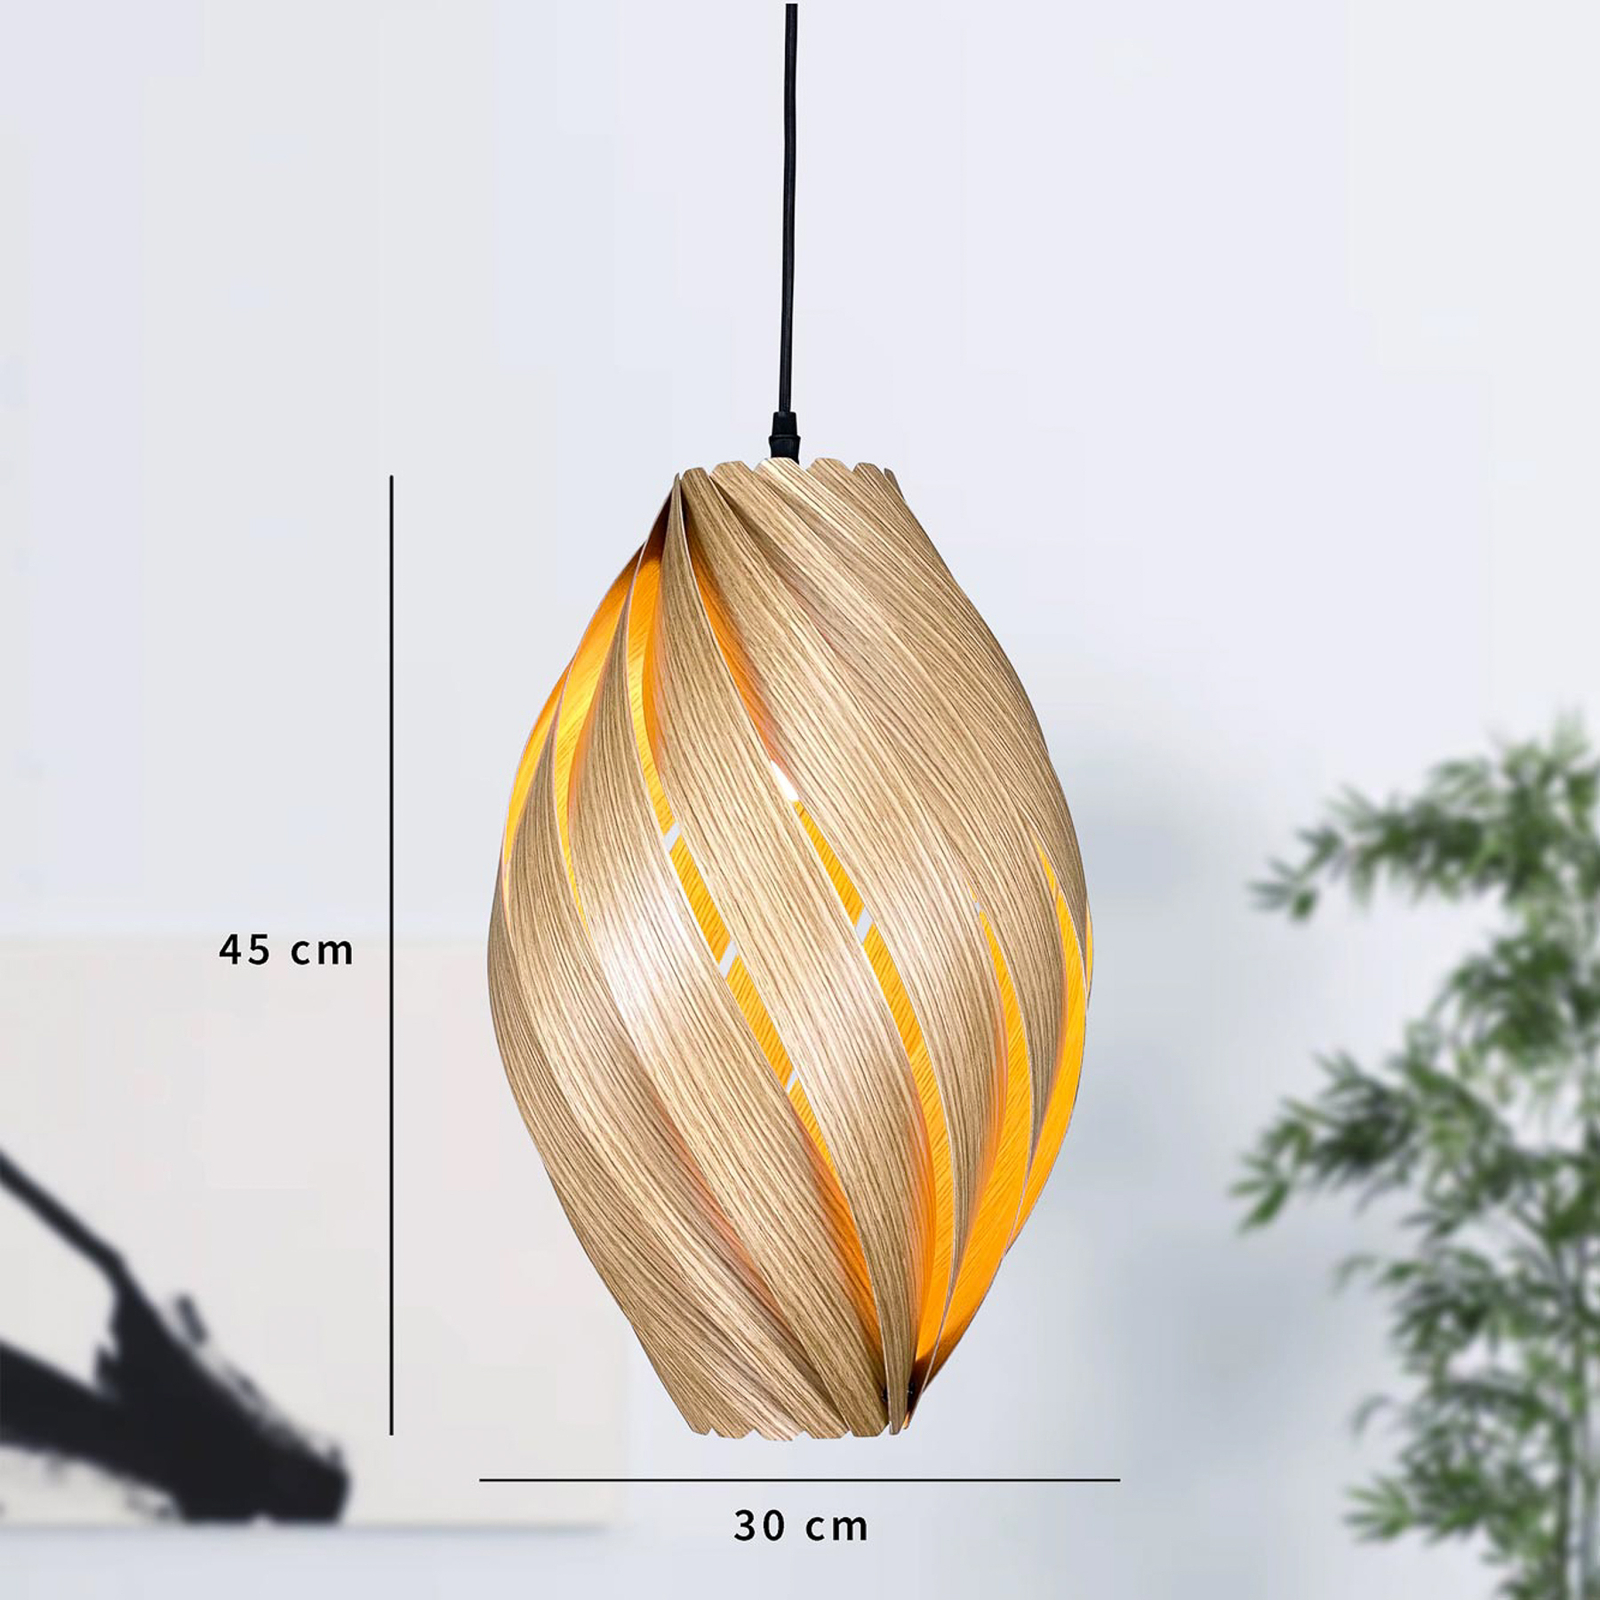 Gofurnit Ardere függő lámpa, tölgy, 45 cm magas